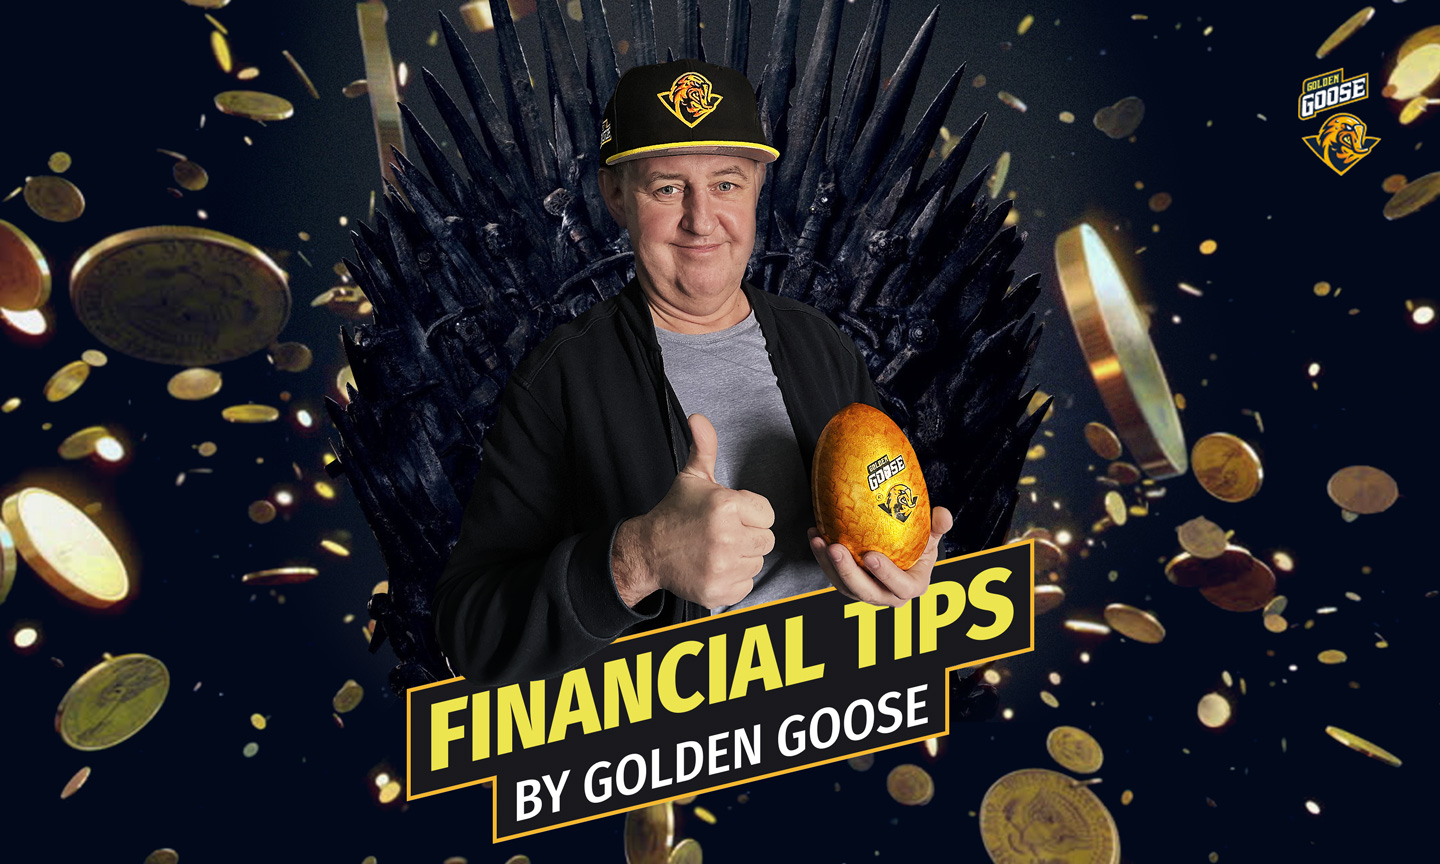 Golden Goose as Your Best Financial Advisor